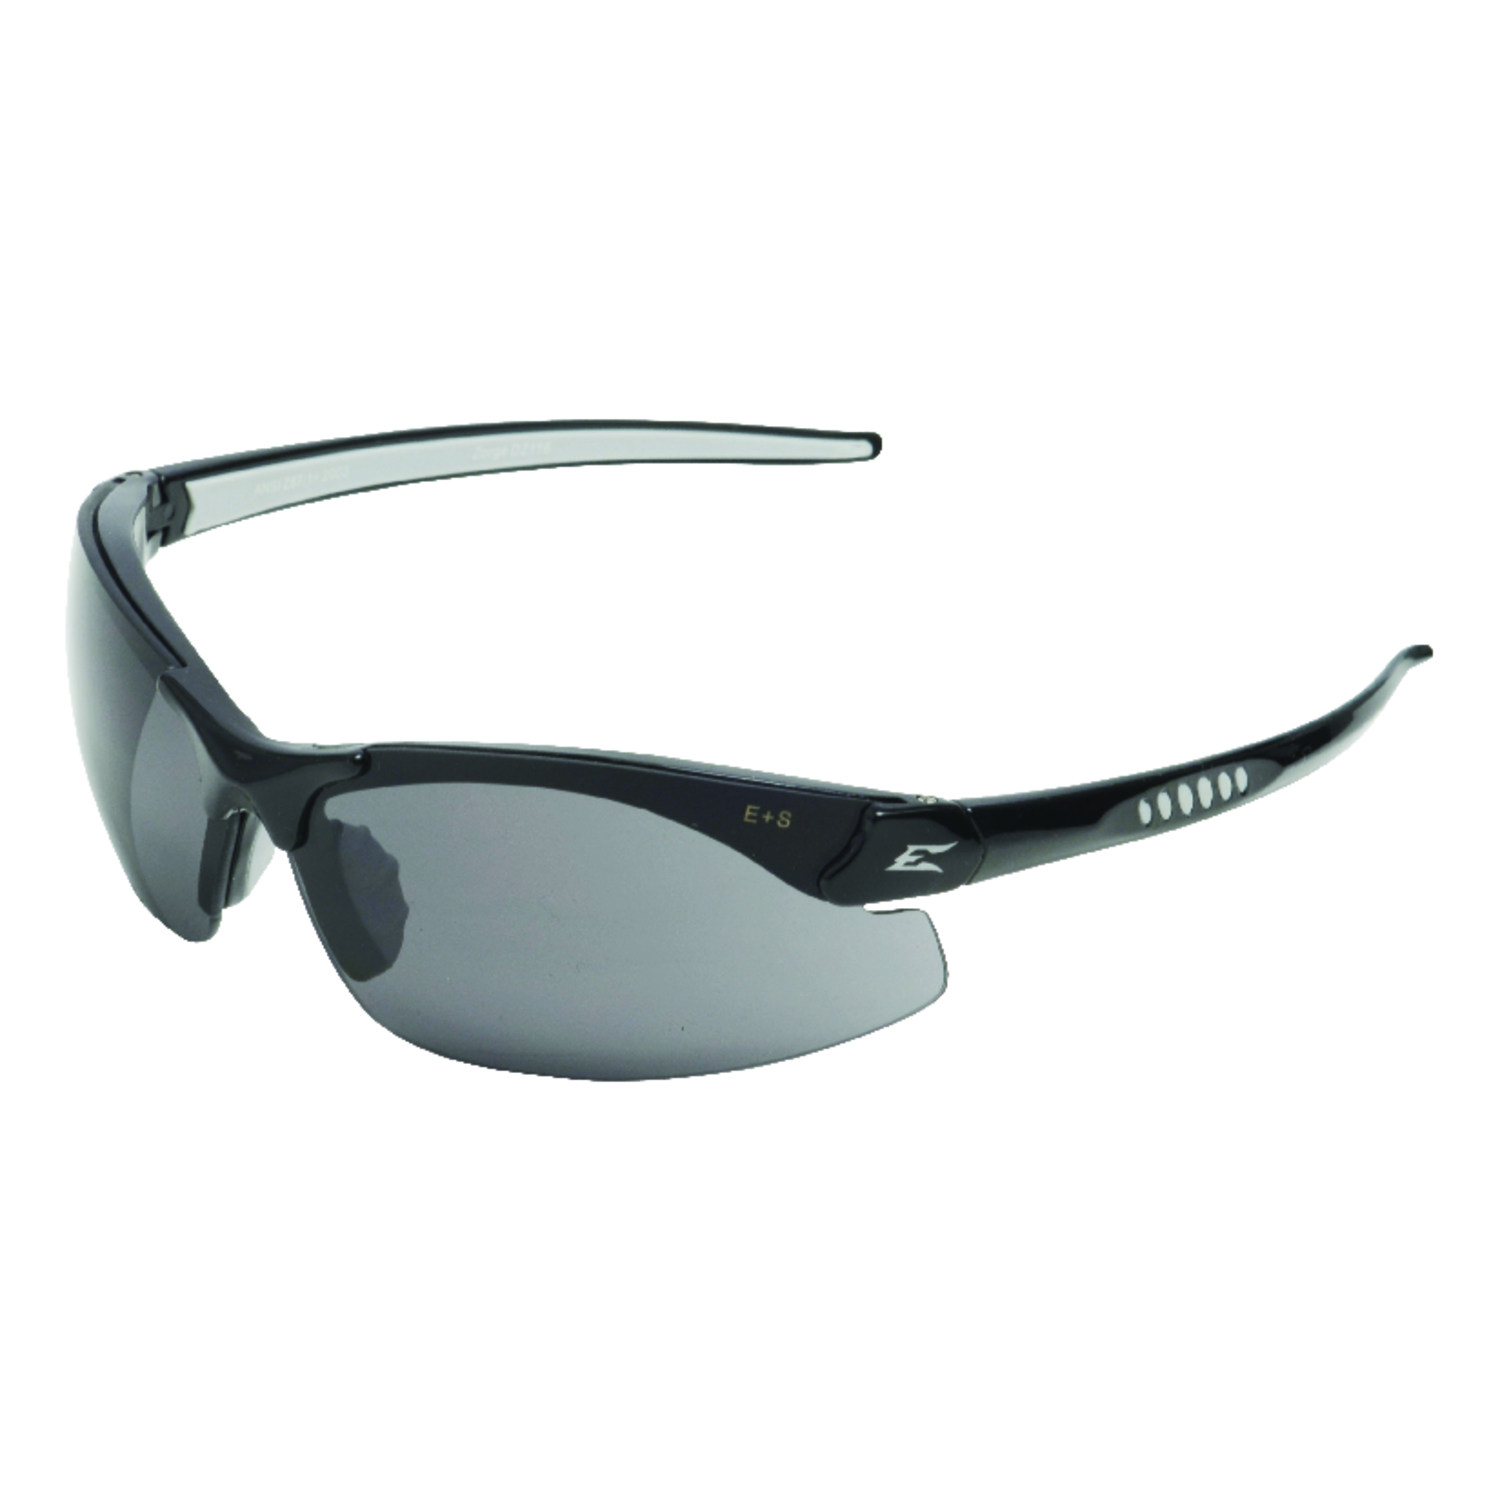 Edge Eyewear Zorge G2 Polarized Wraparound Safety Glasses Smoke Lens Black Frame 1 pc